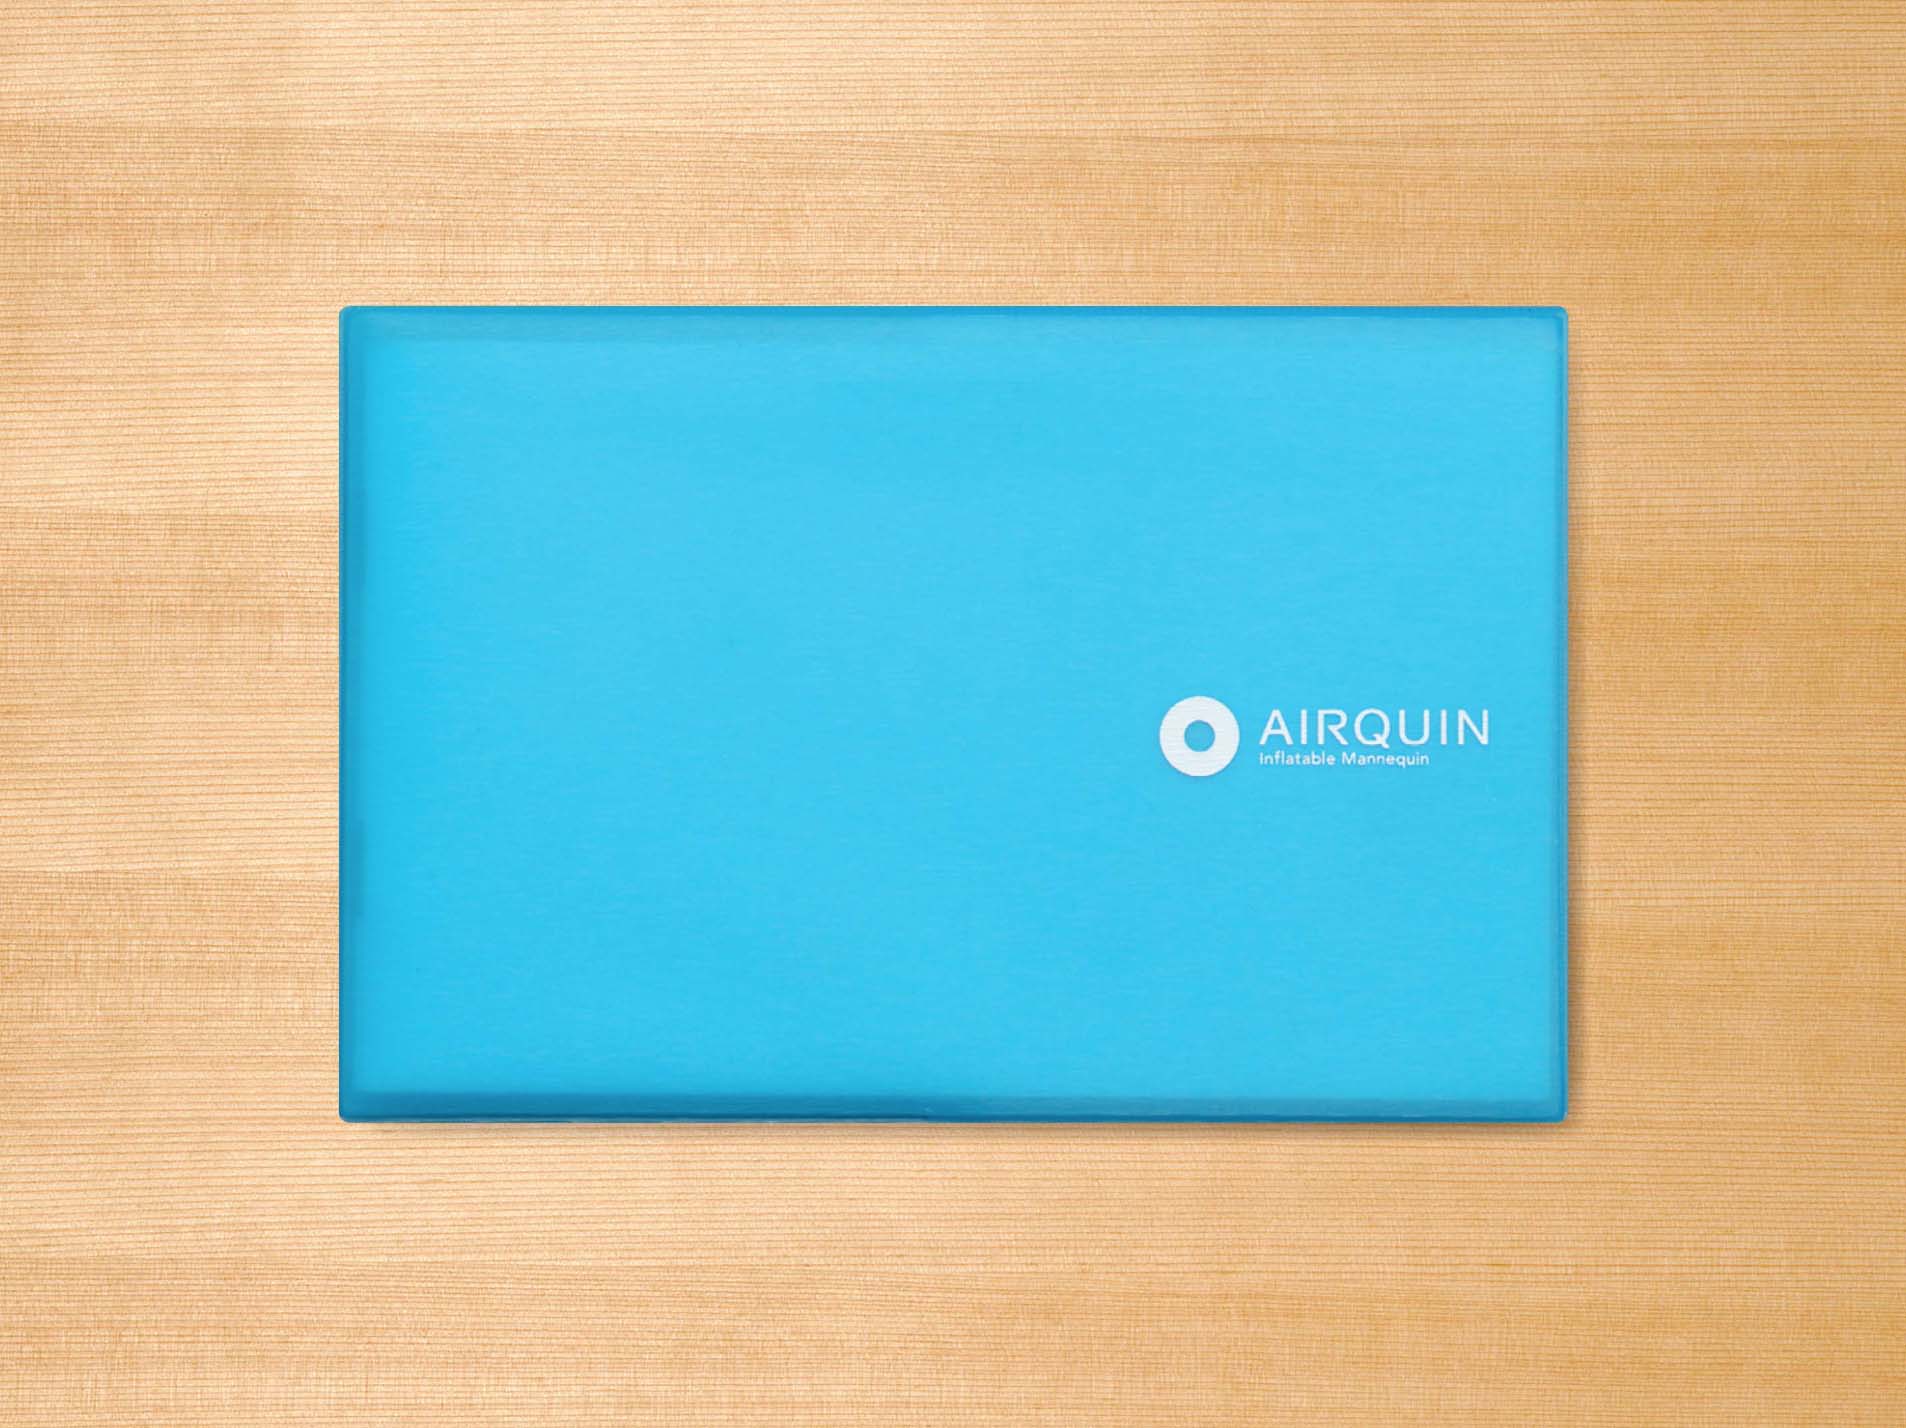 airquin branding